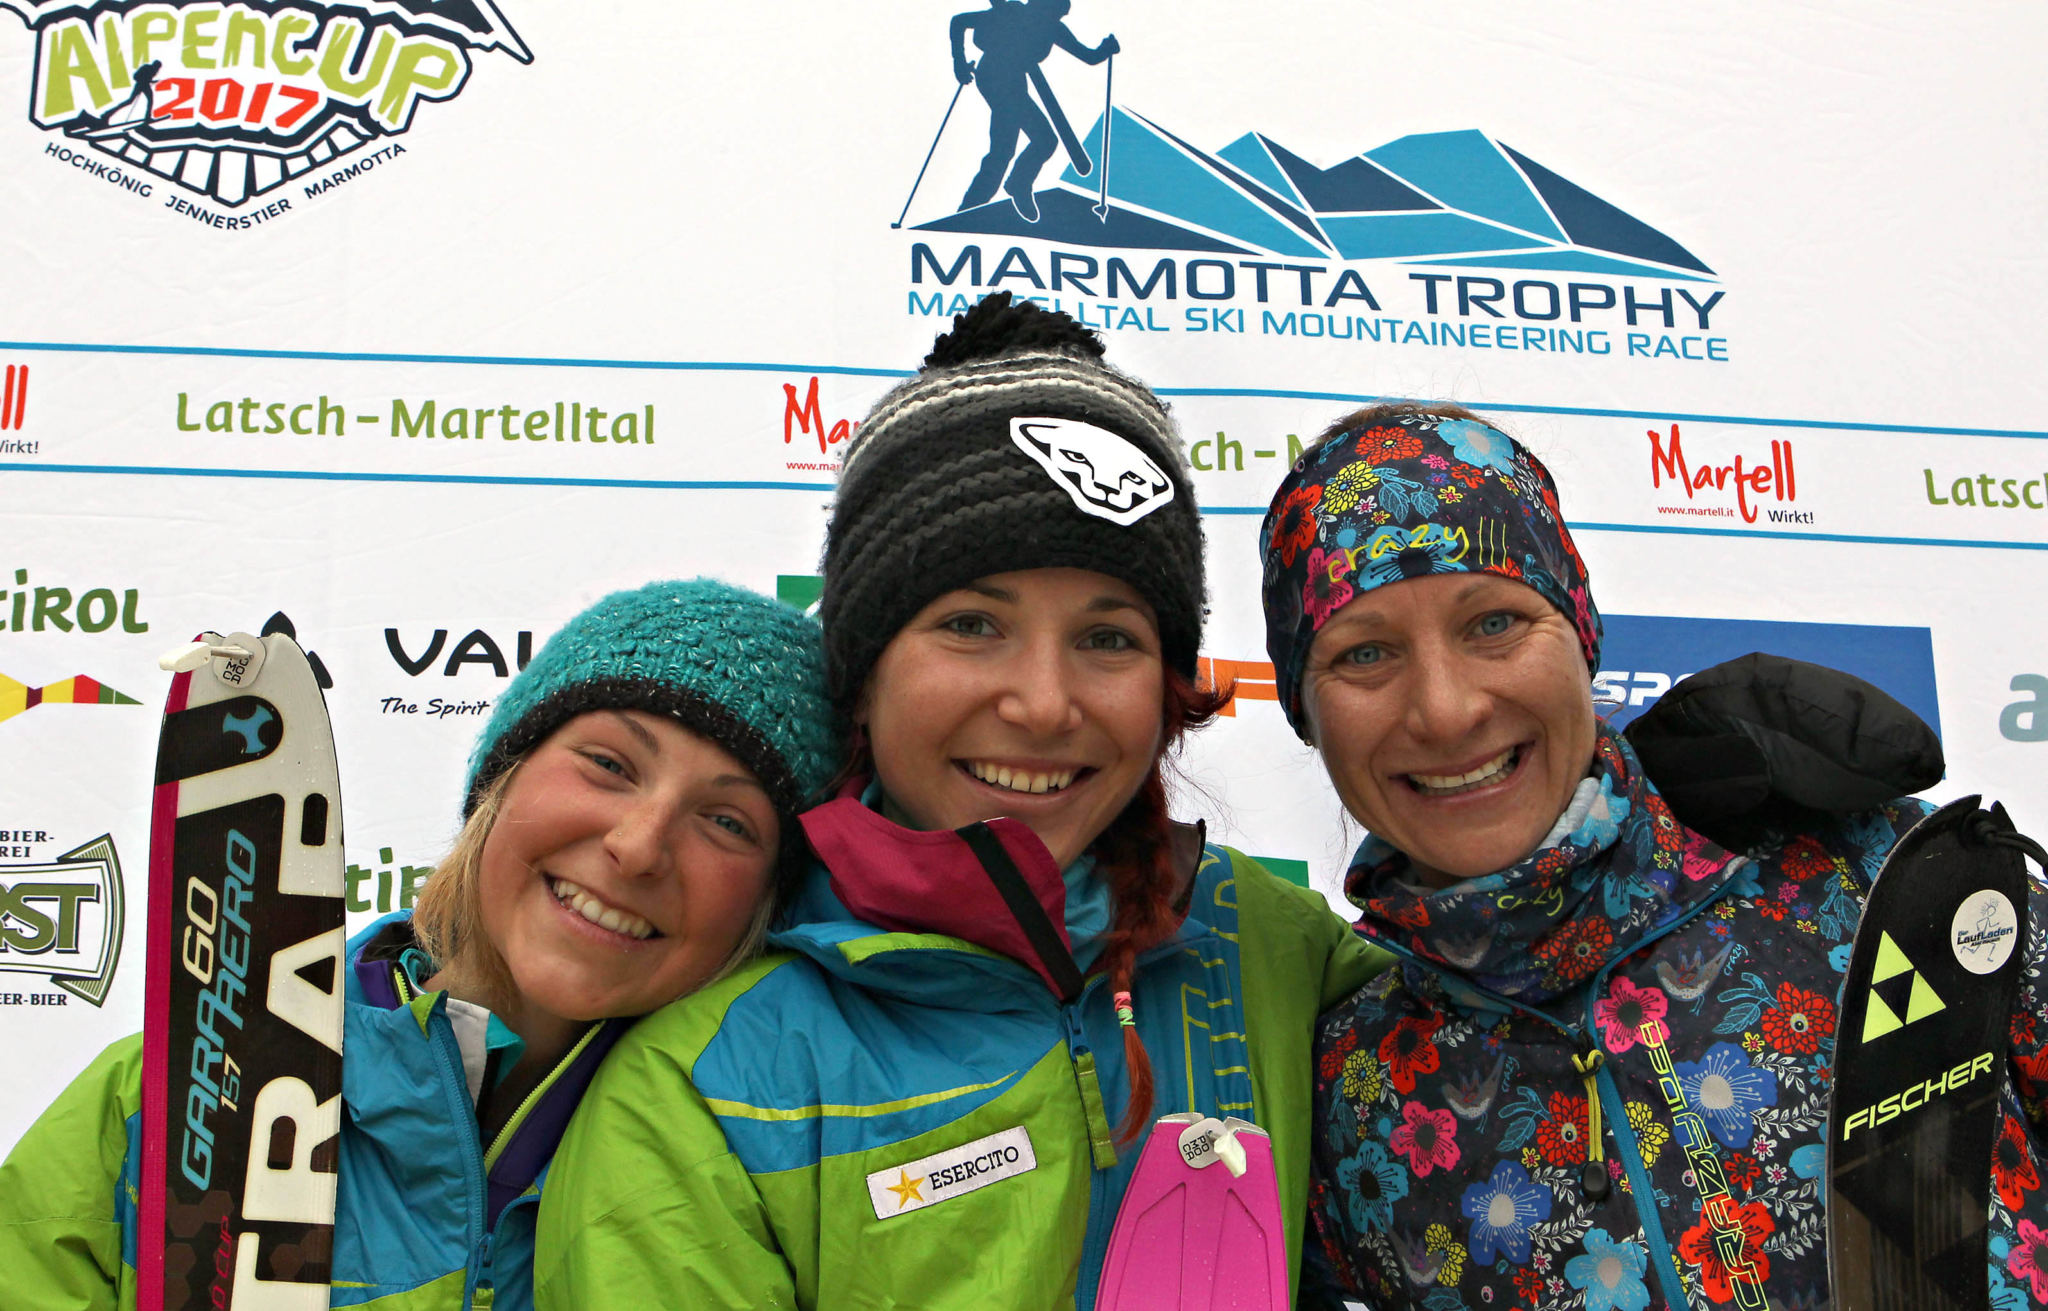 Marmotta Trophy Martell